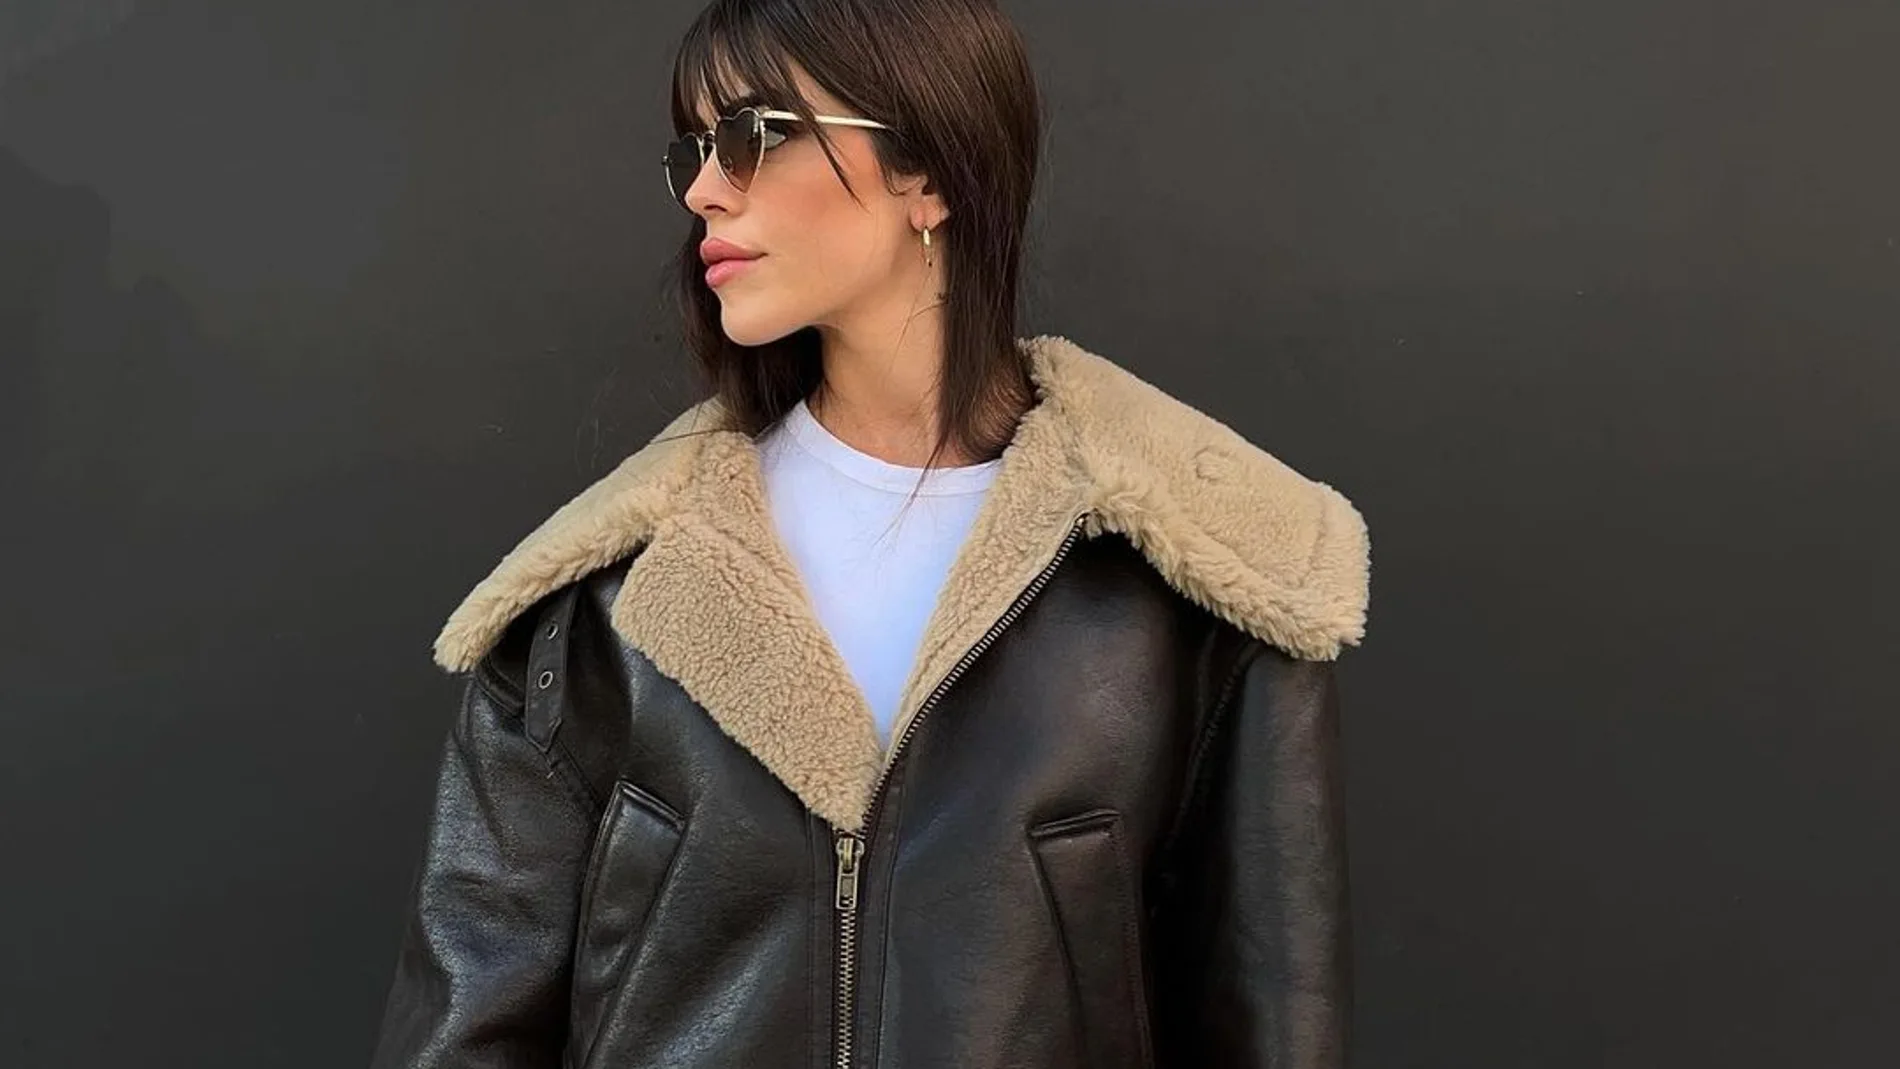 cazadora de Zara de Violeta Mangriñán es todo lo que necesitas para no pasar frío en diciembre